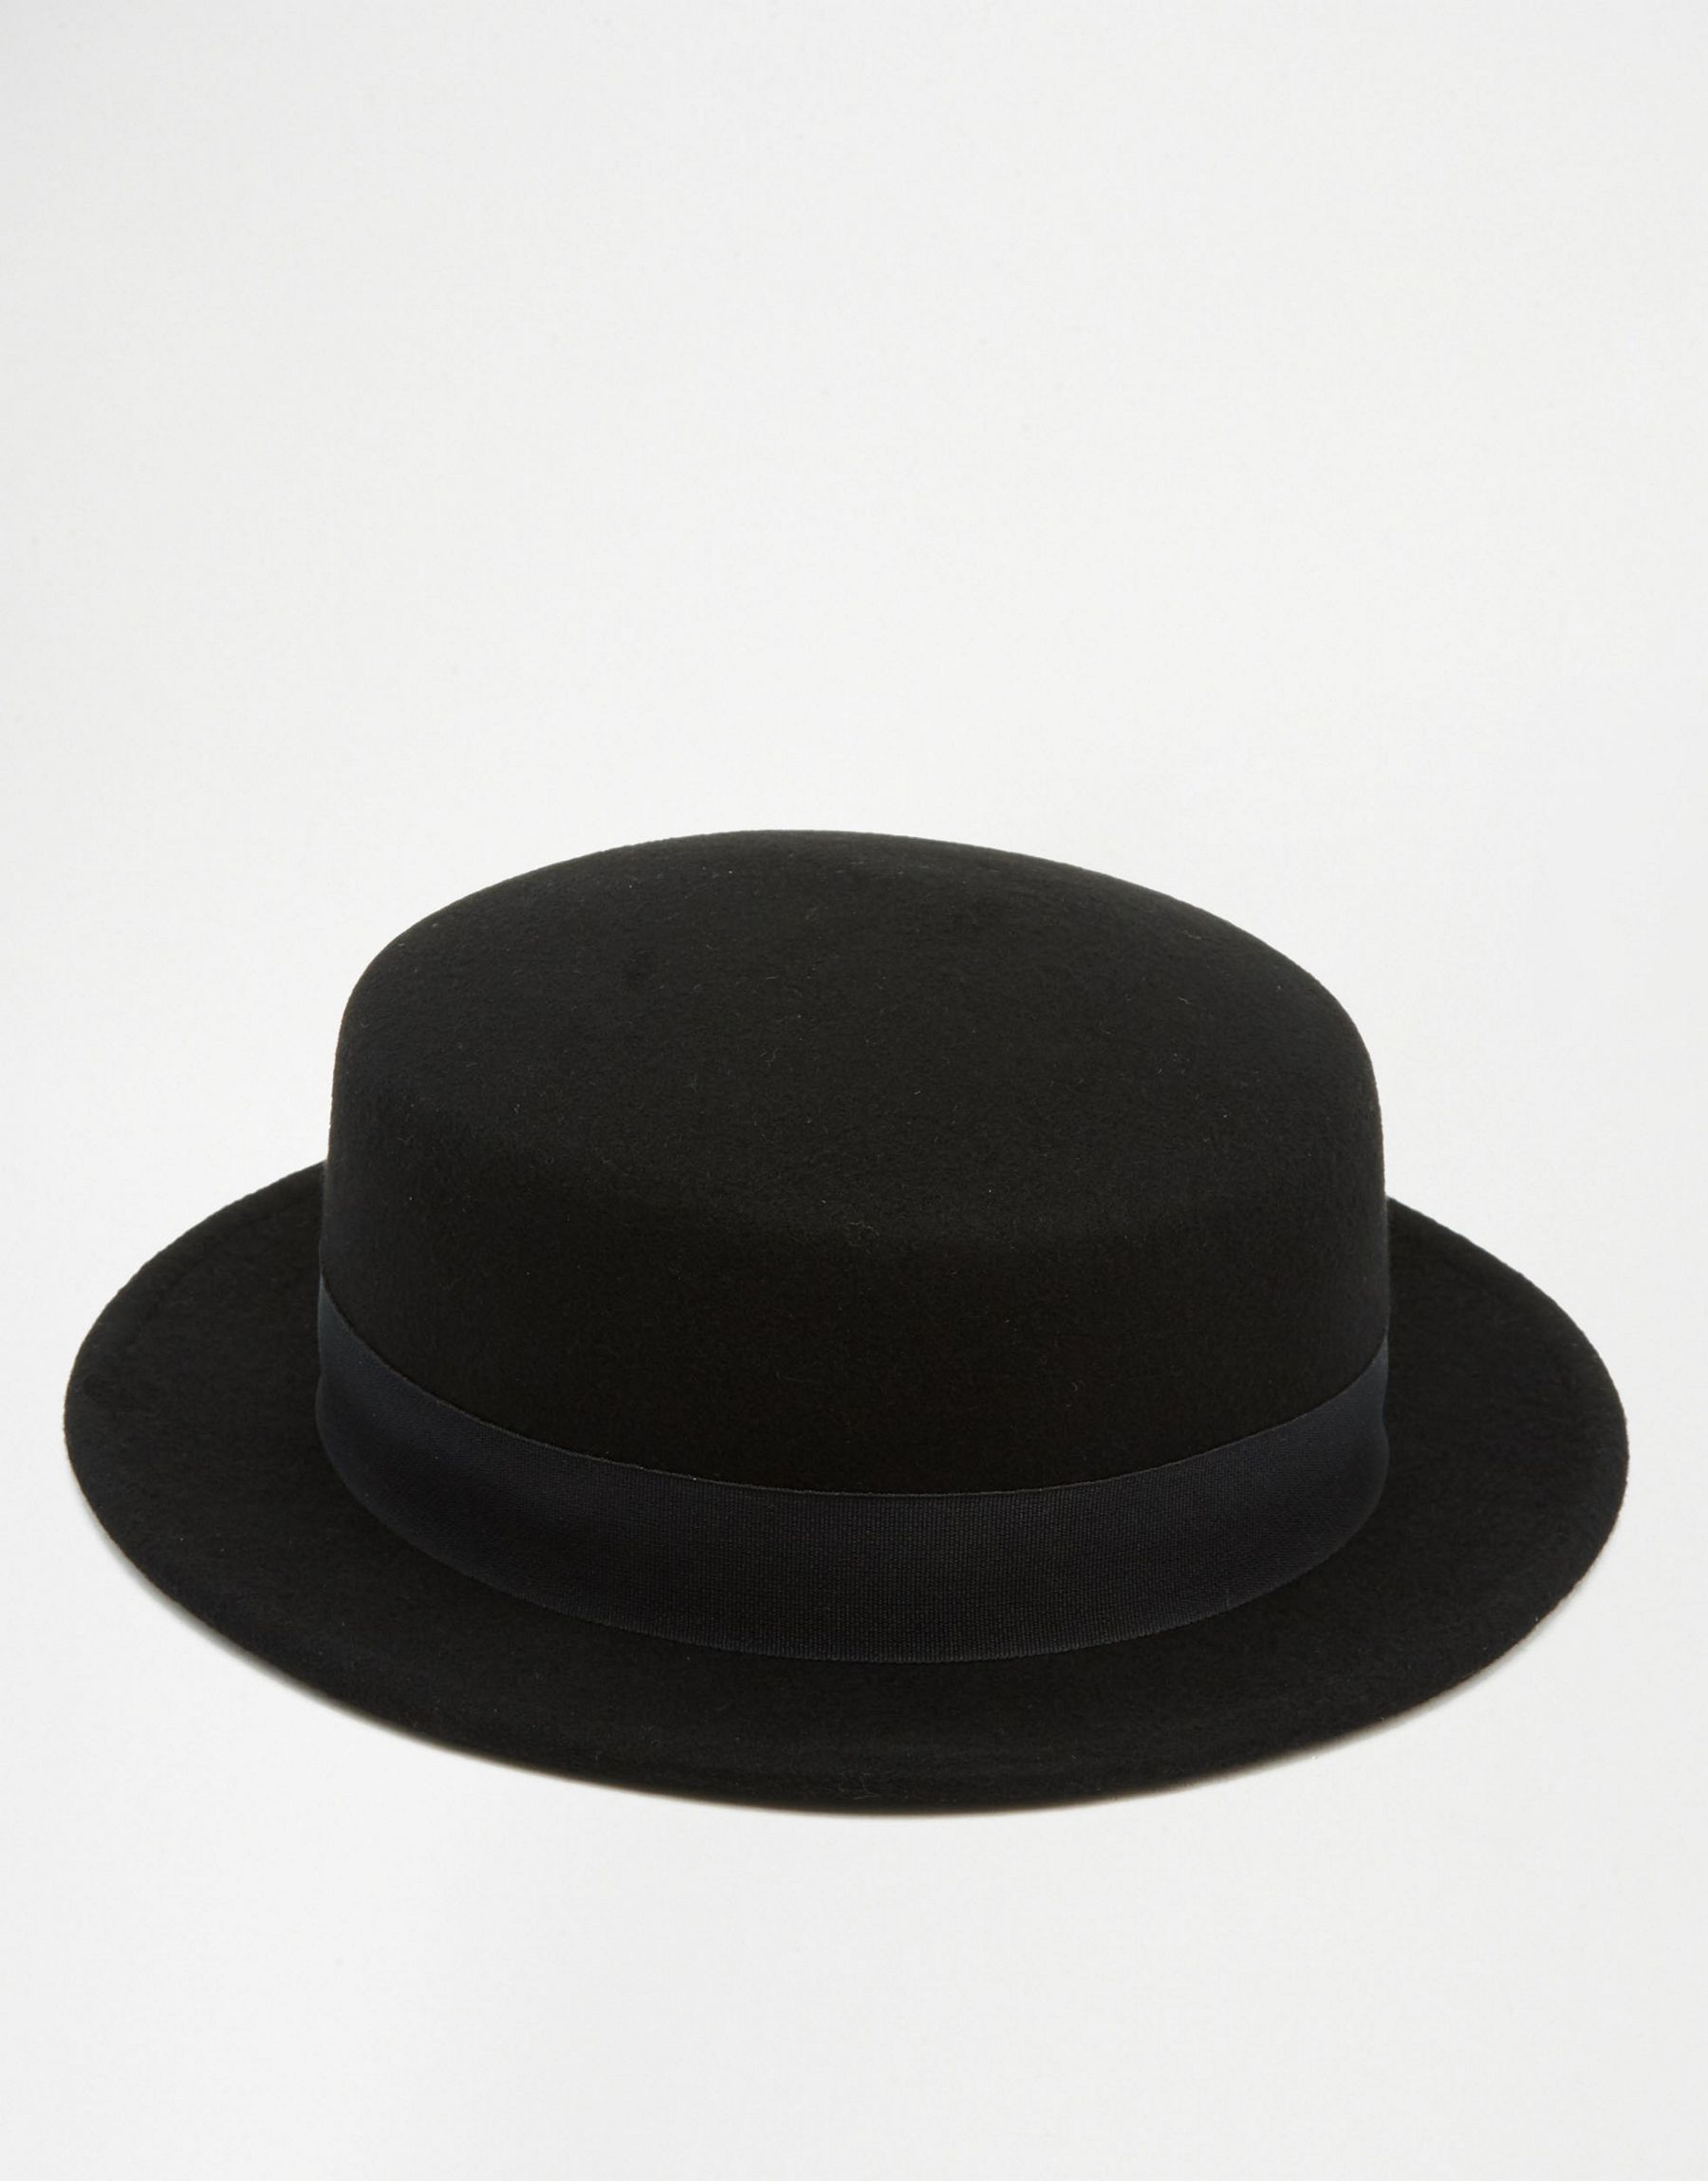 Lyst - Asos Flat Top Hat With Narrow Brim in Black for Men